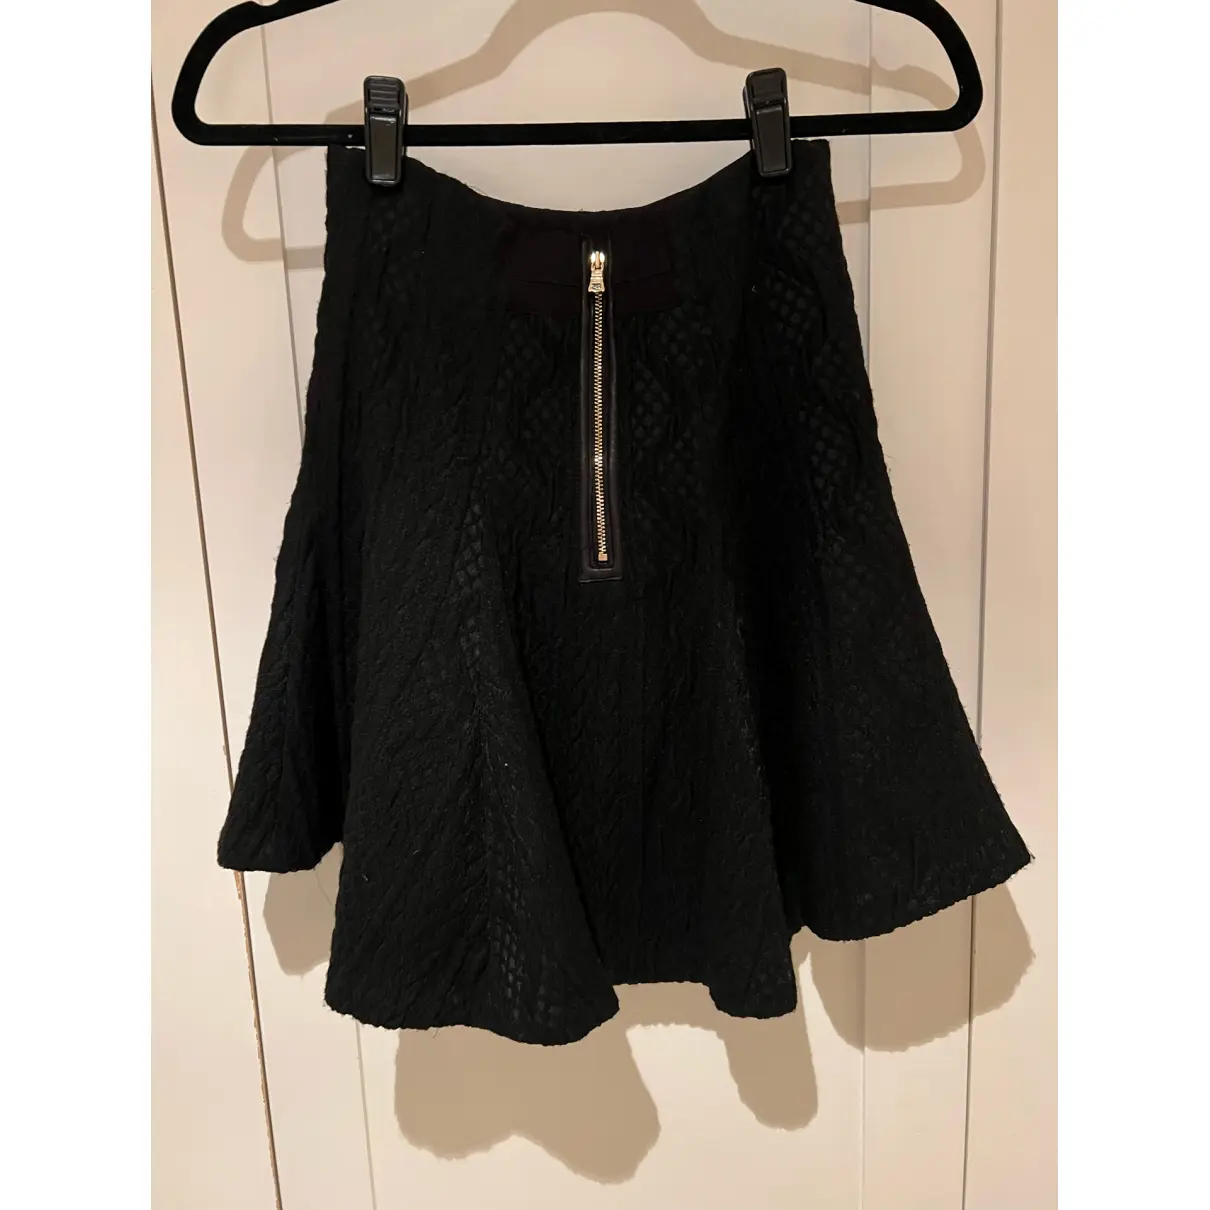 Buy Alice & Olivia Mini skirt online